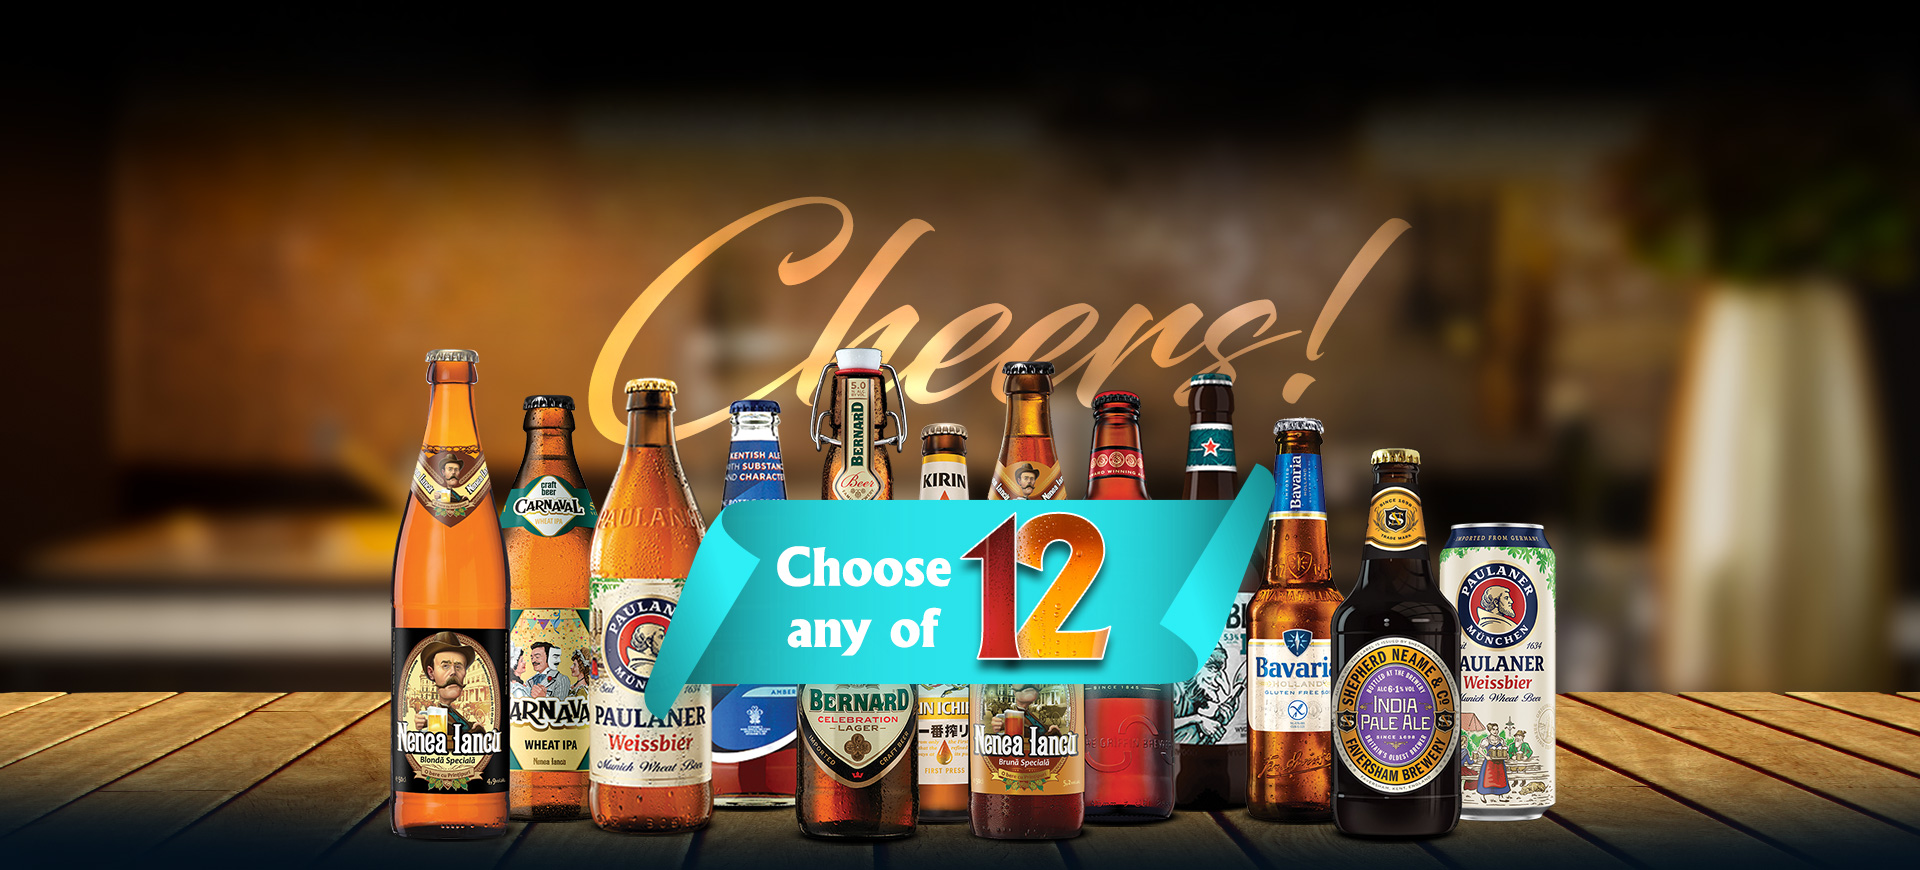 Choose any 12 beer